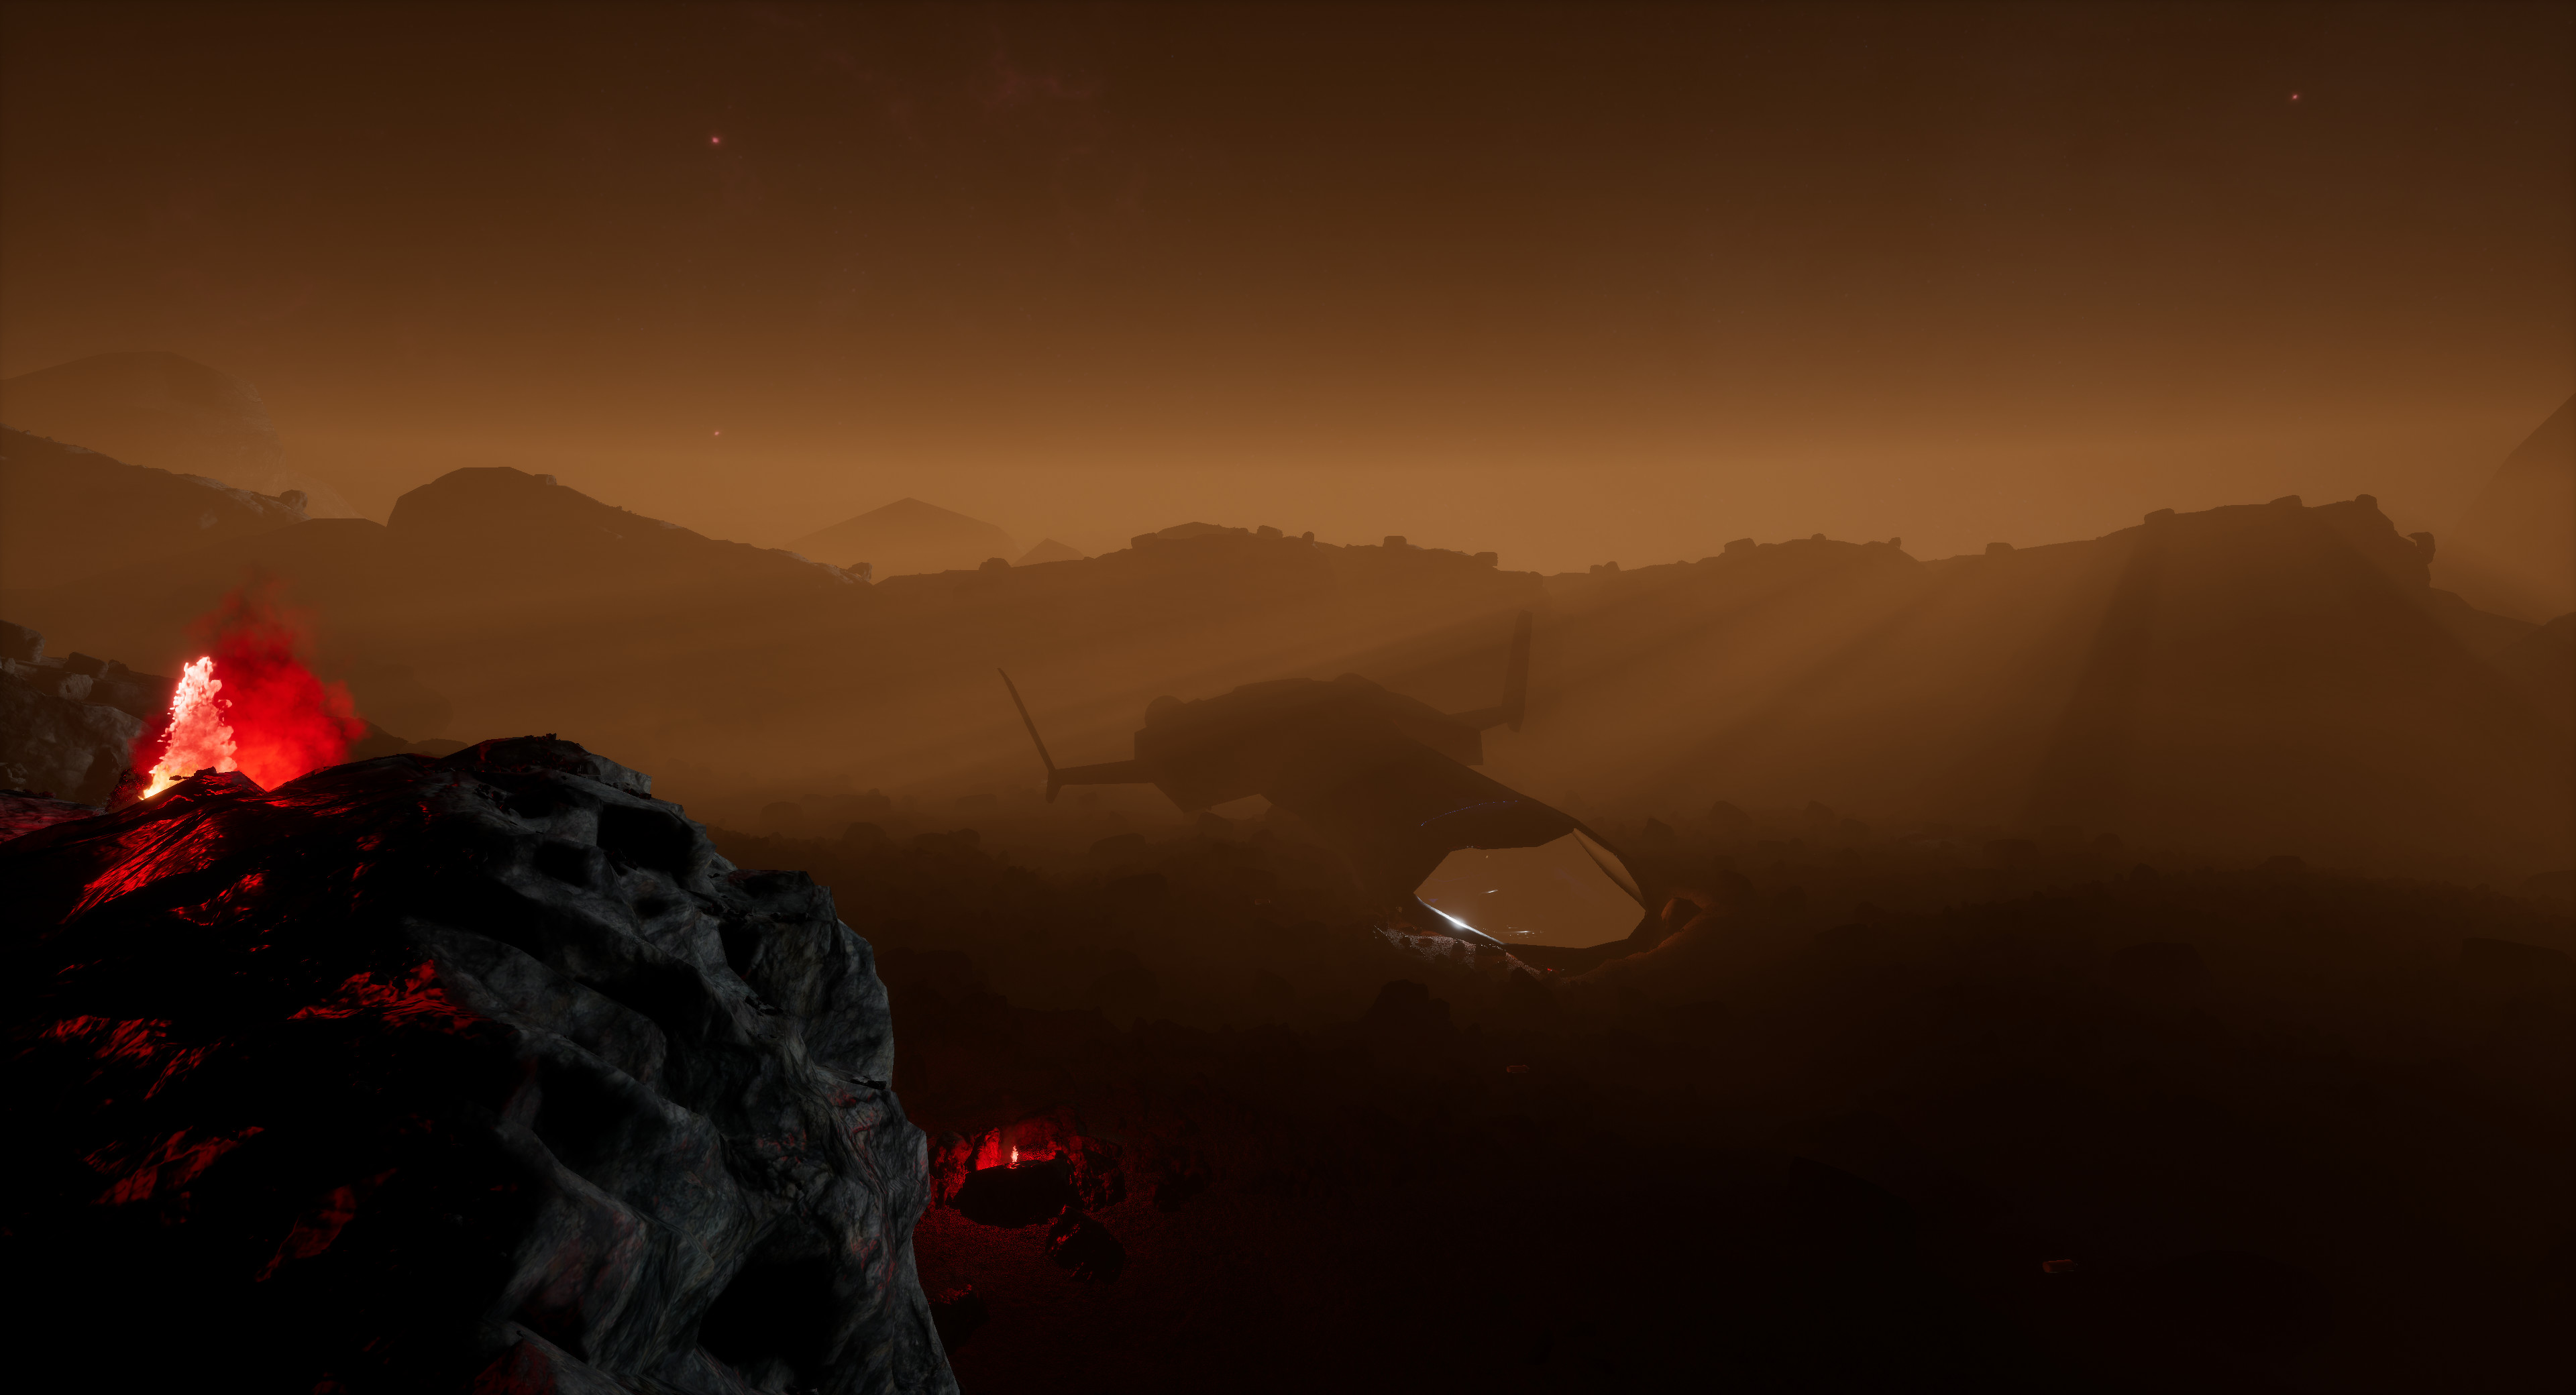 Callisto screenshot